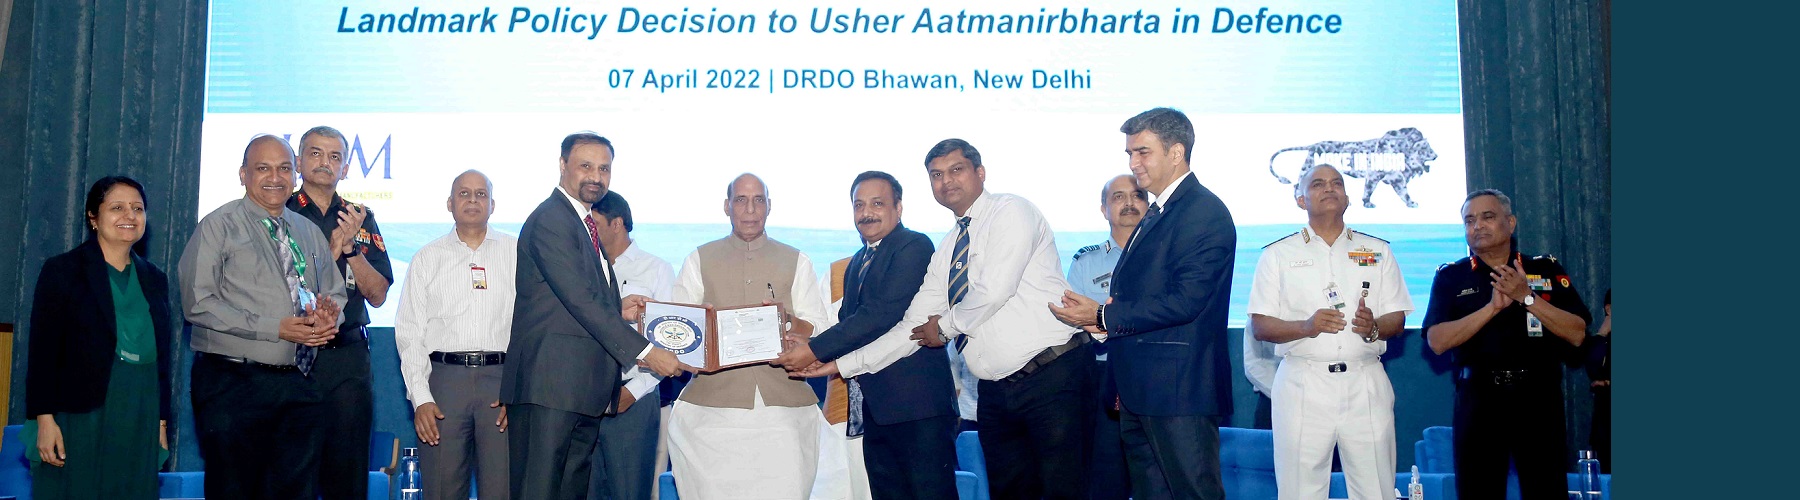 Raksha Mantri Shri Rajnath Singh handing over licensing agreements to the industries for transfer of technologies developed by DRDO, in New Delhi on April 07, 2022.